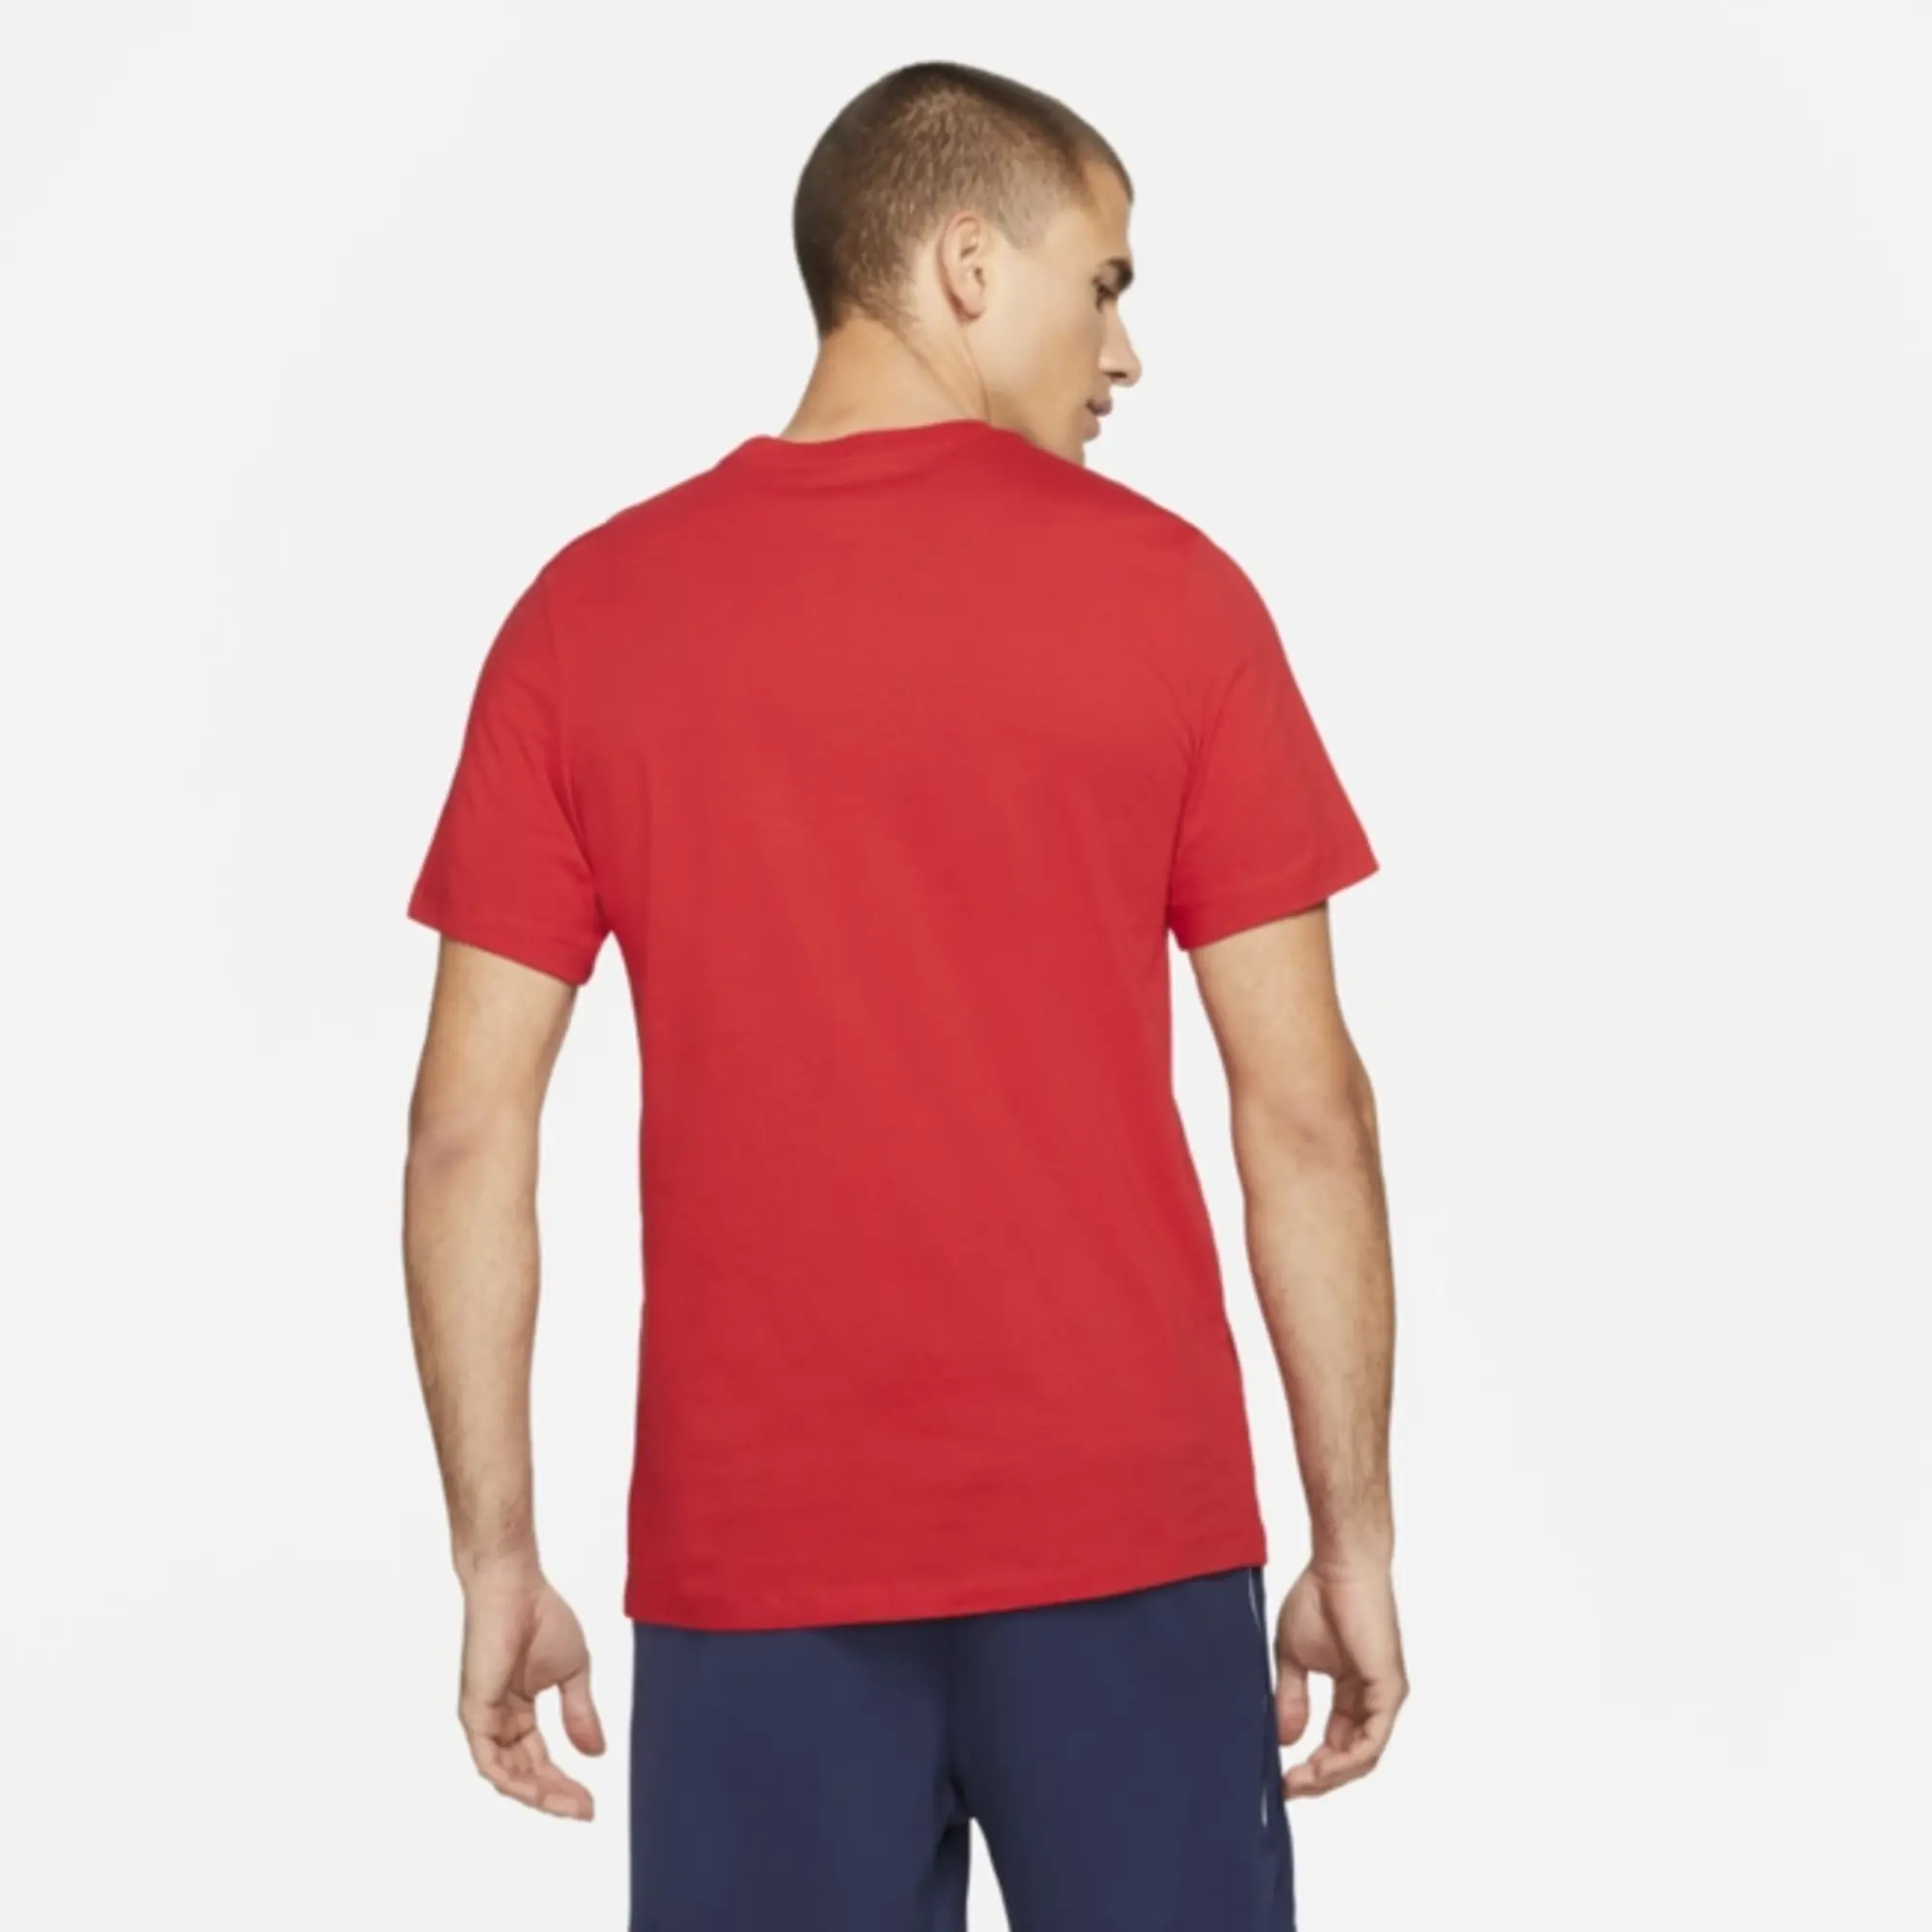 Nike Atlético de Madrid Crest T-Shirt - Red